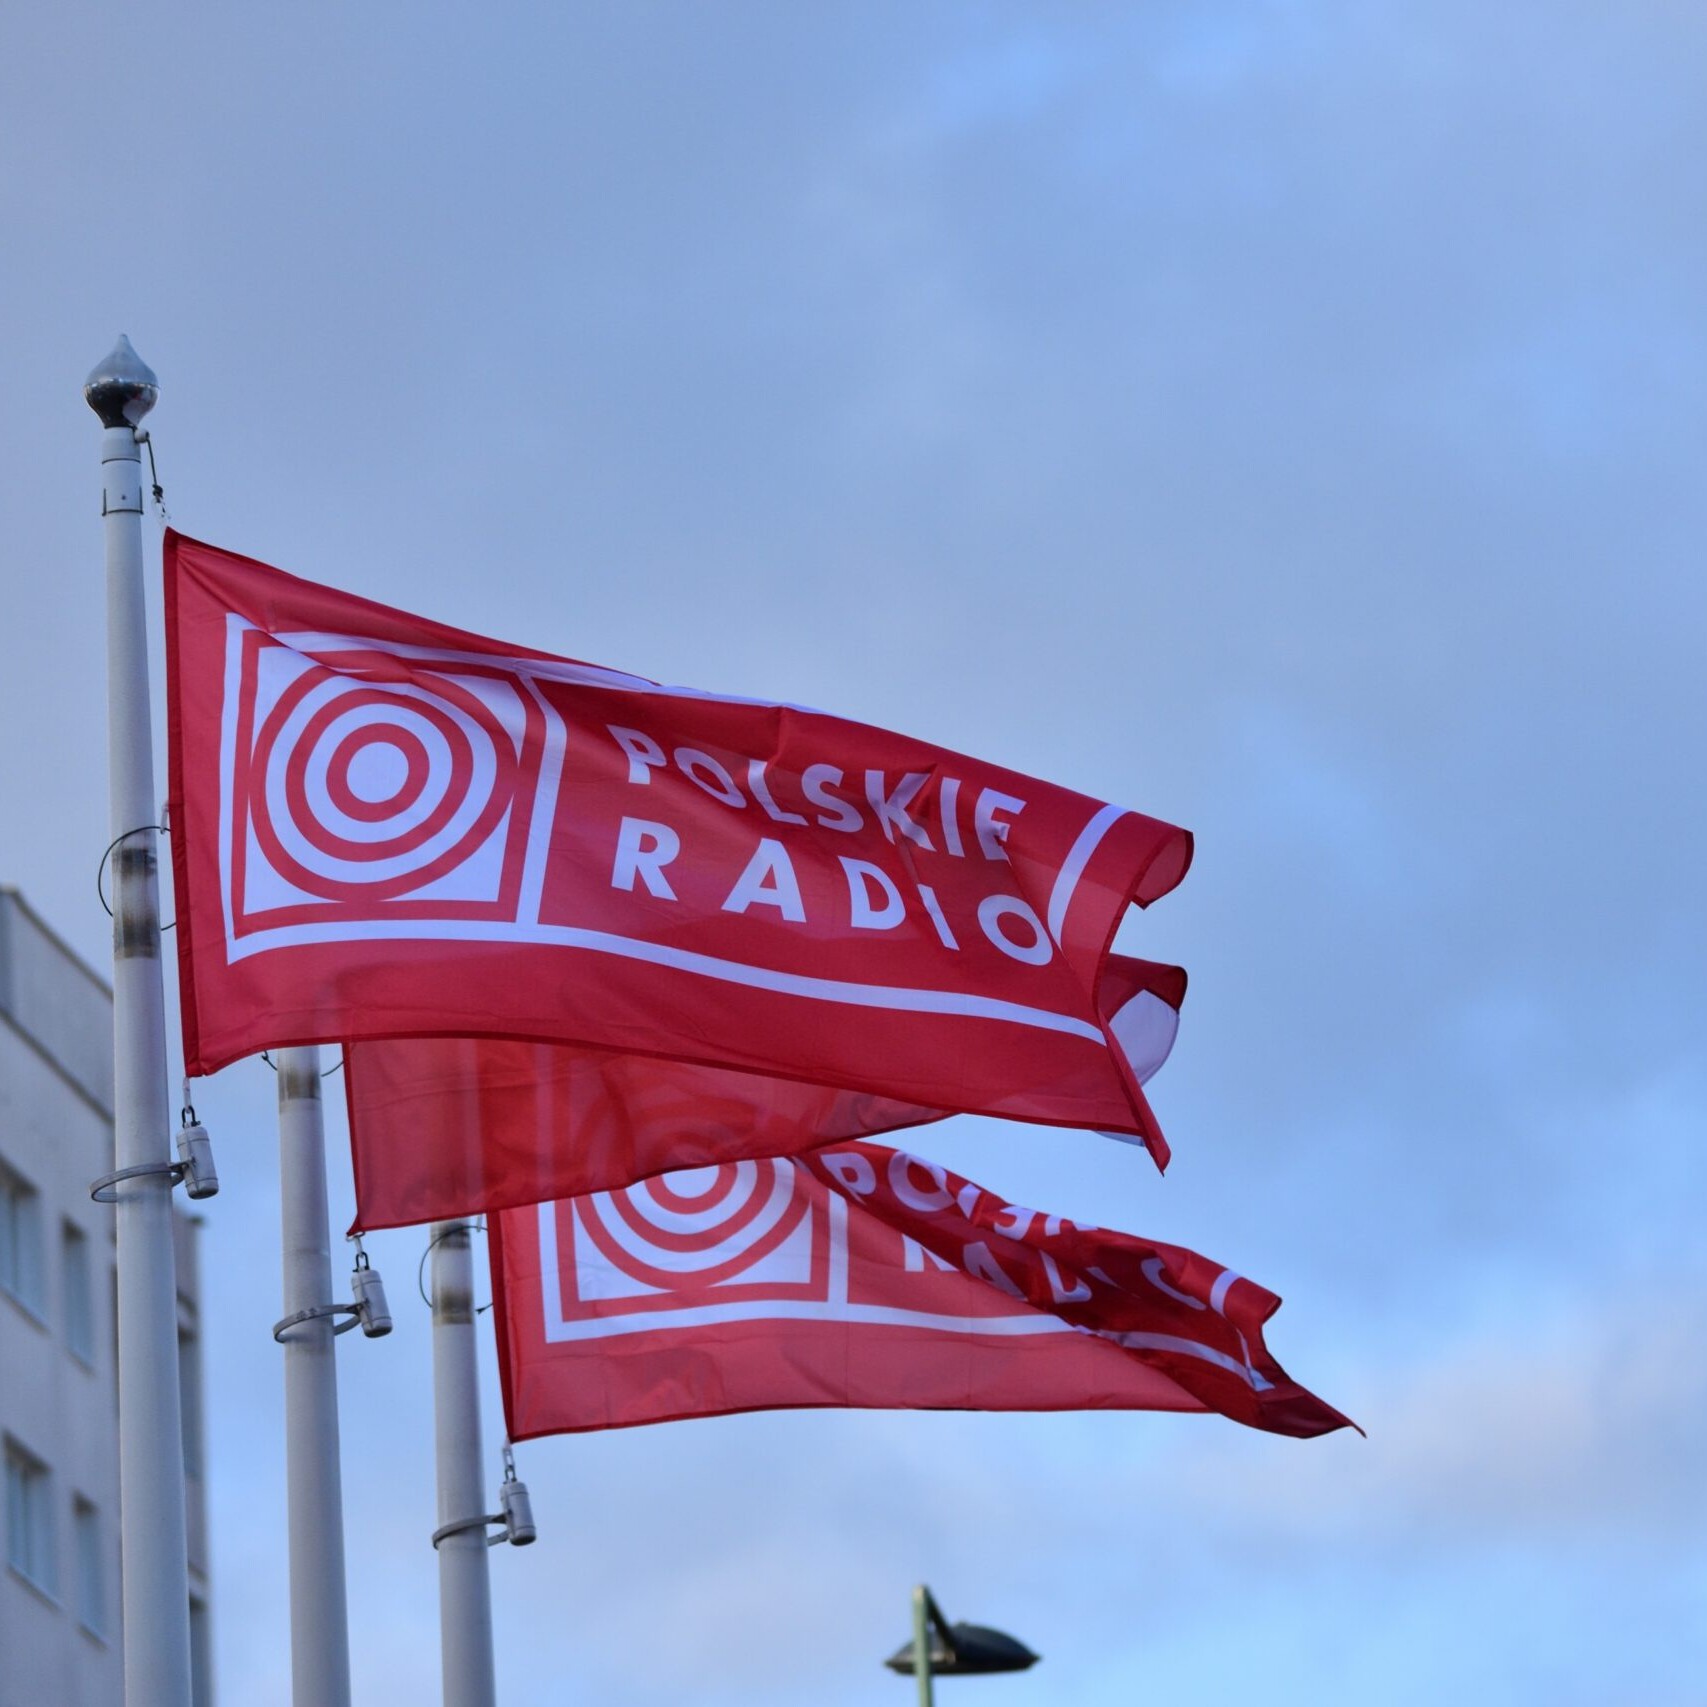 Polski Radio flags on a flagpole.